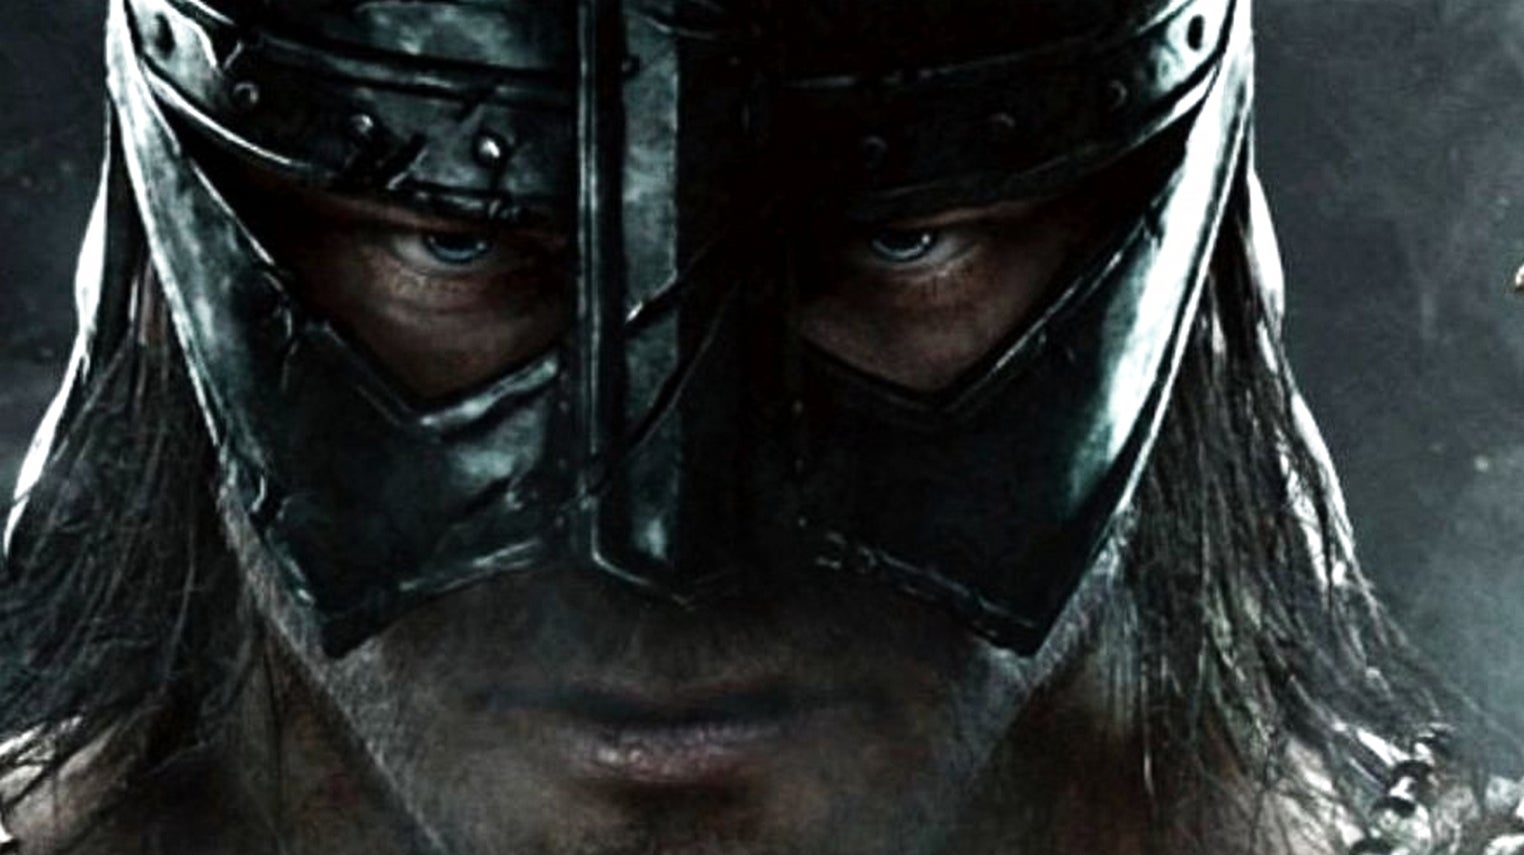 Bilder zu The Elder Scrolls bald als Netflix-Serie? Insider streut Gerüchte